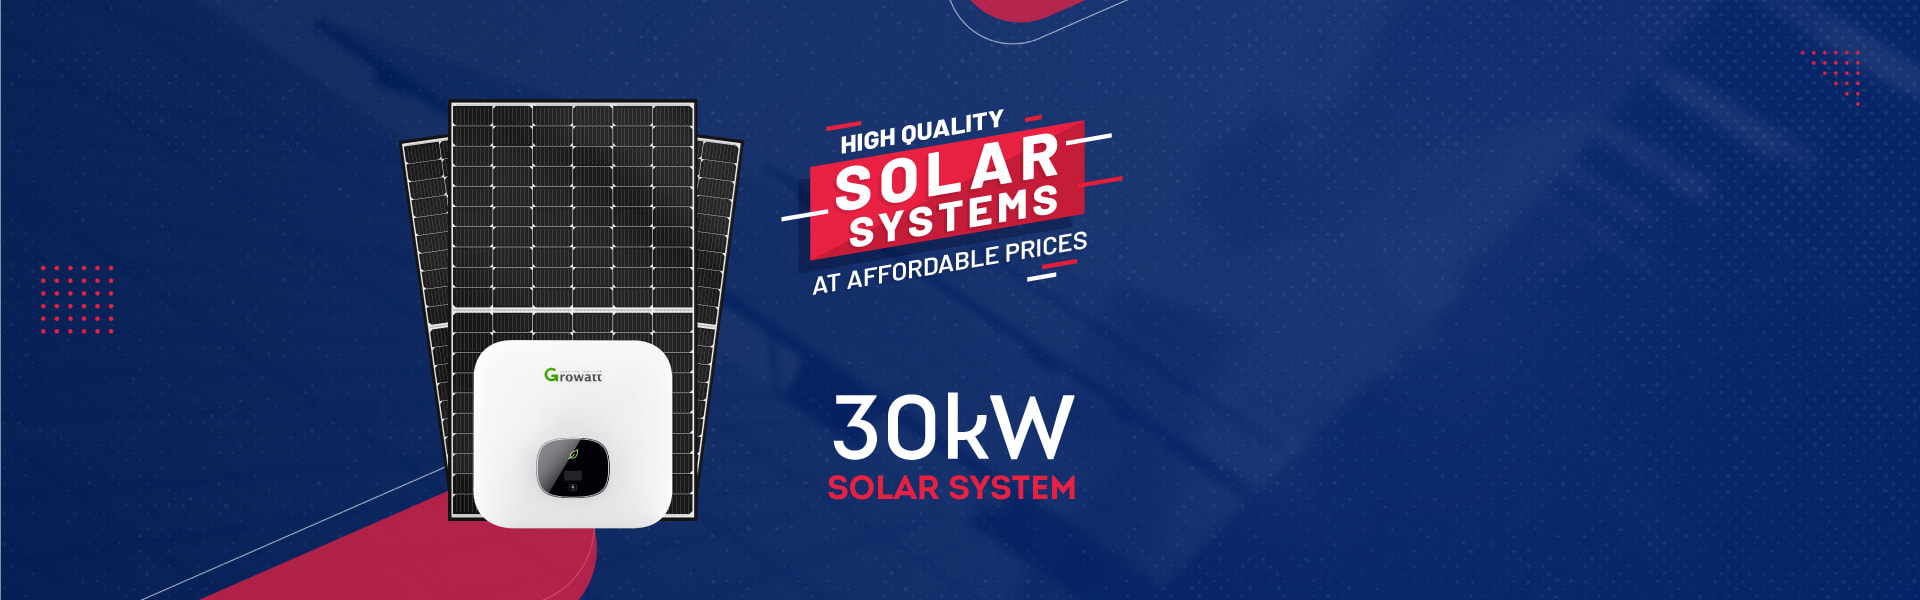 30kw solar panel install system banner